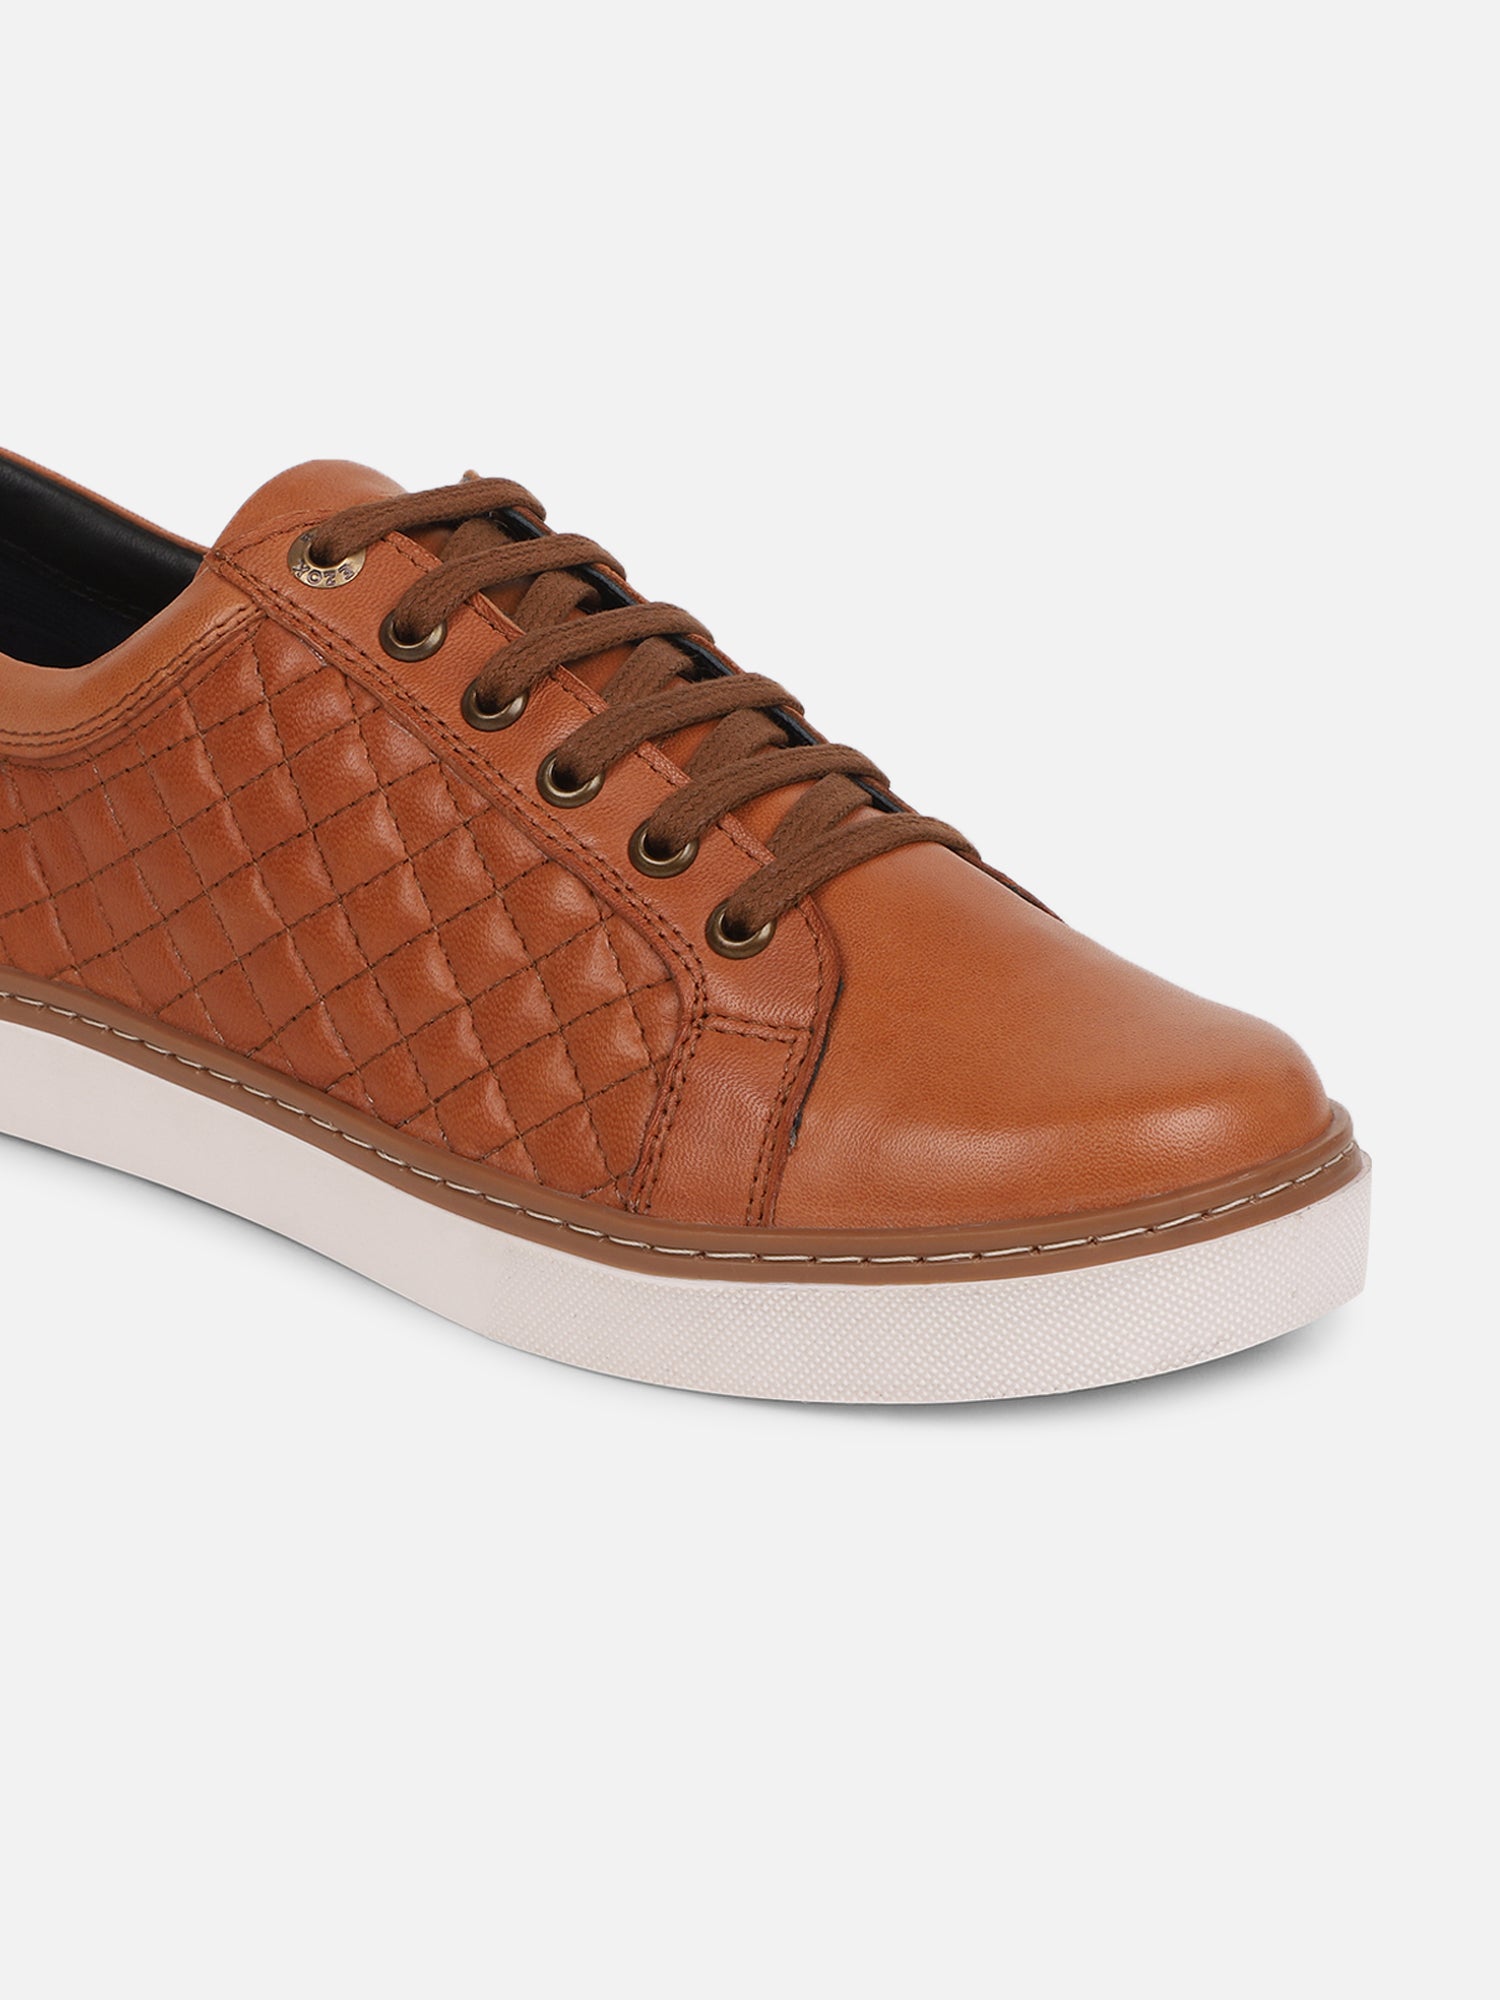 Ezok Men Casual Leather Sneaker ( Tan )